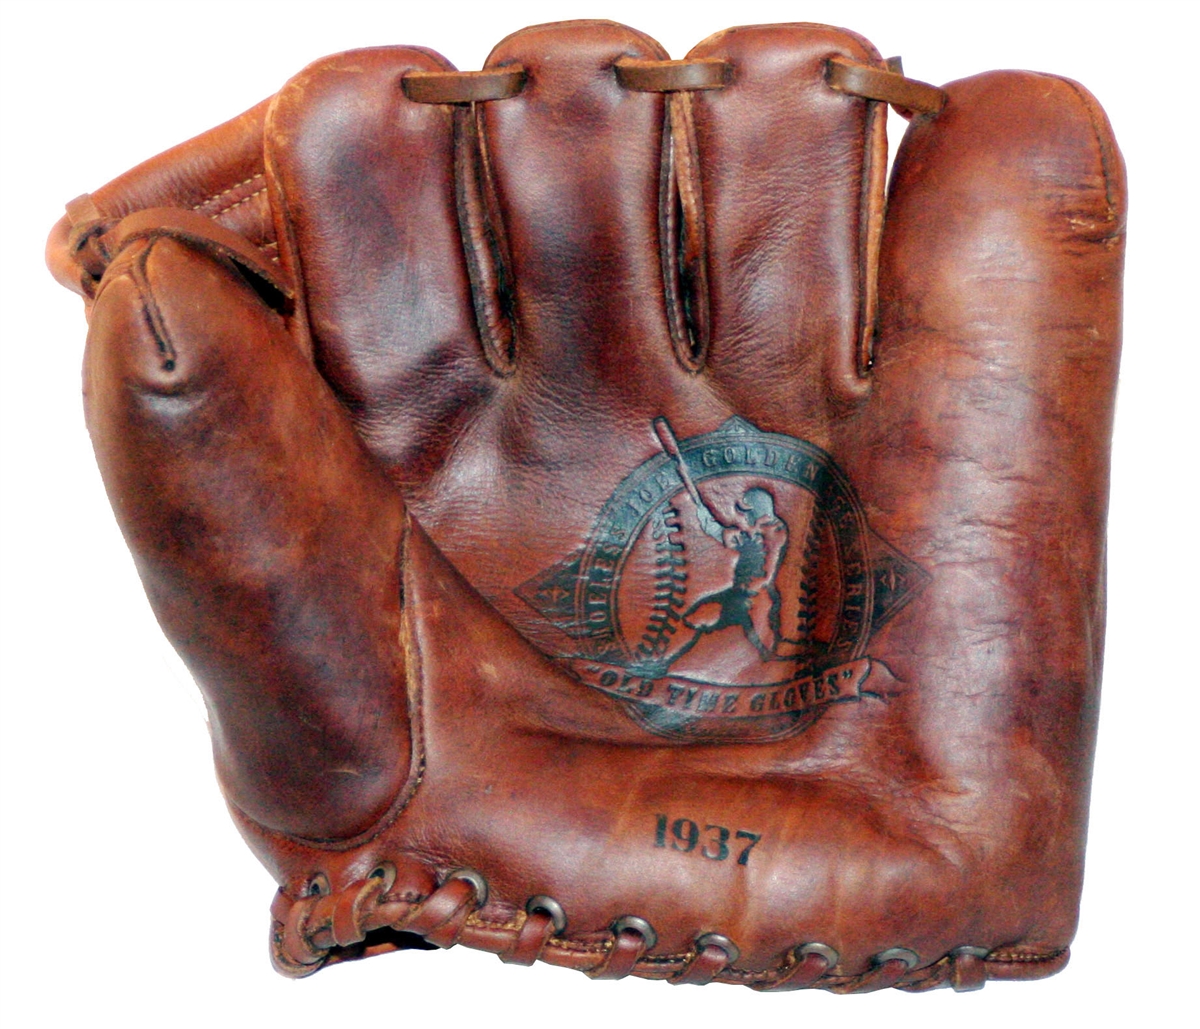 1937-golden-era-baseball-glove-vintage-baseball-glove